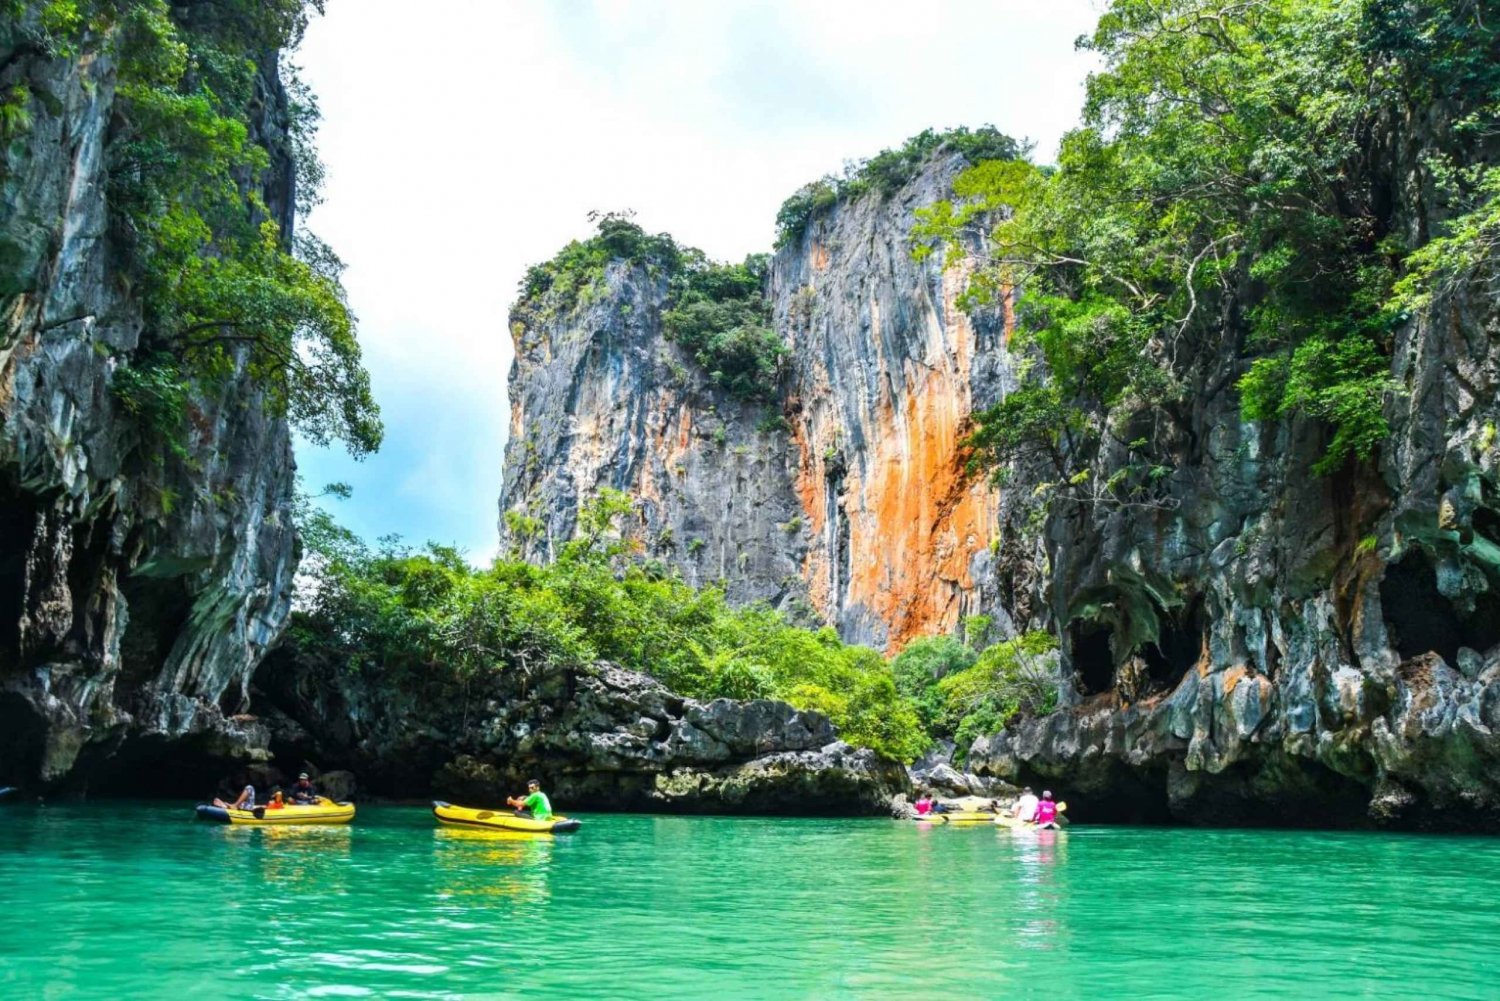 Phuket: James Bond-øya med stor båt og kanopadling i sjøgrotte